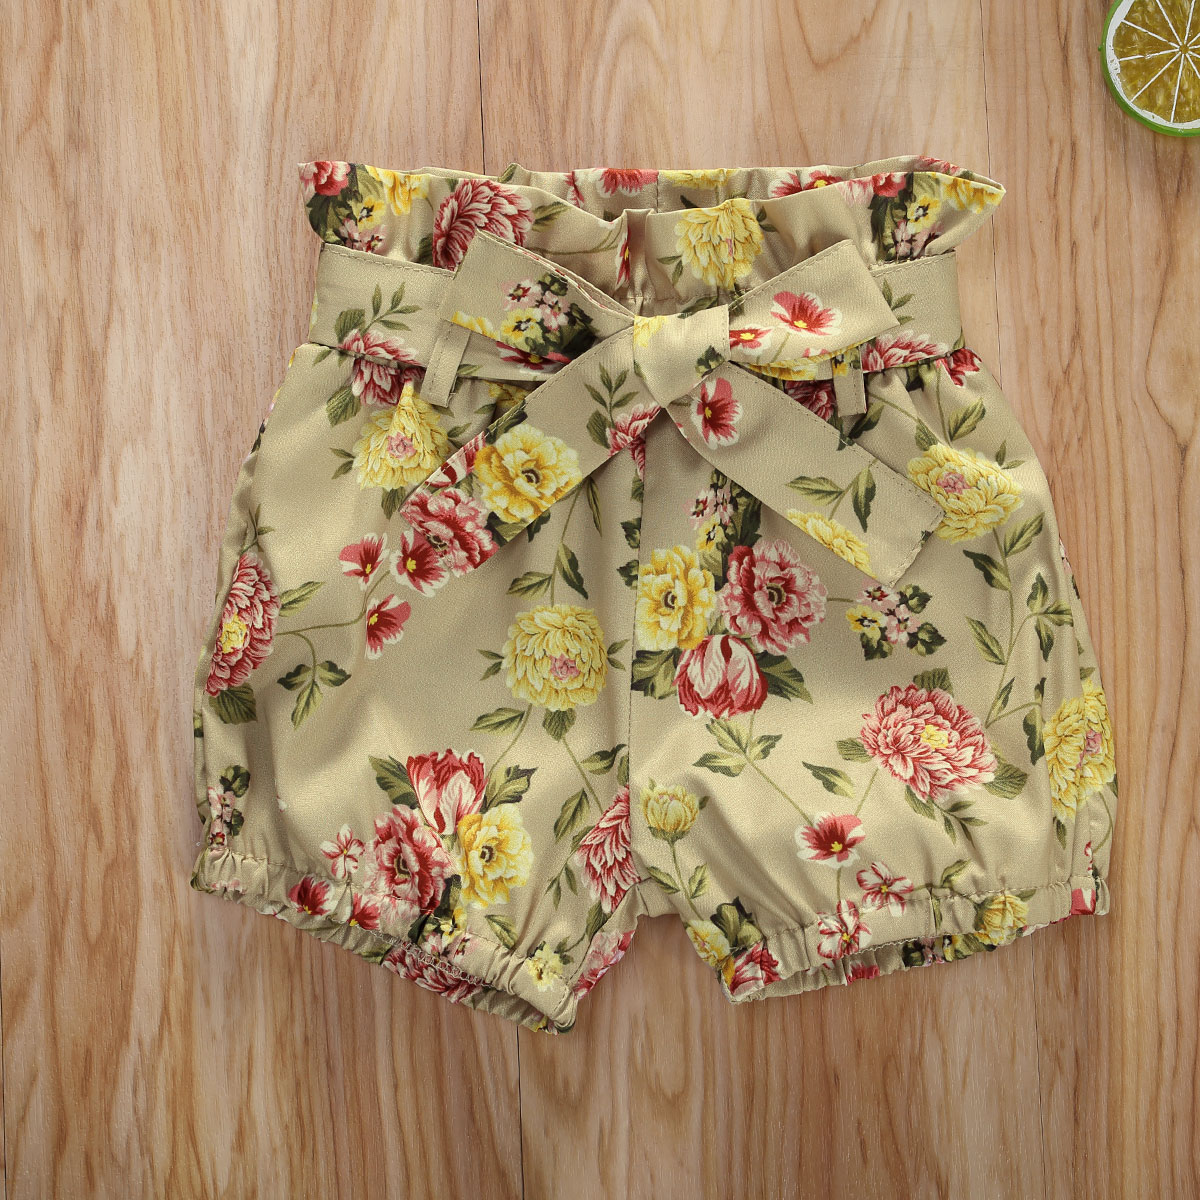 Citgeett 3PCS Newborn Baby Girls Clothes Cotton Romper Top Pants Shorts Summer Outfits Casual Set